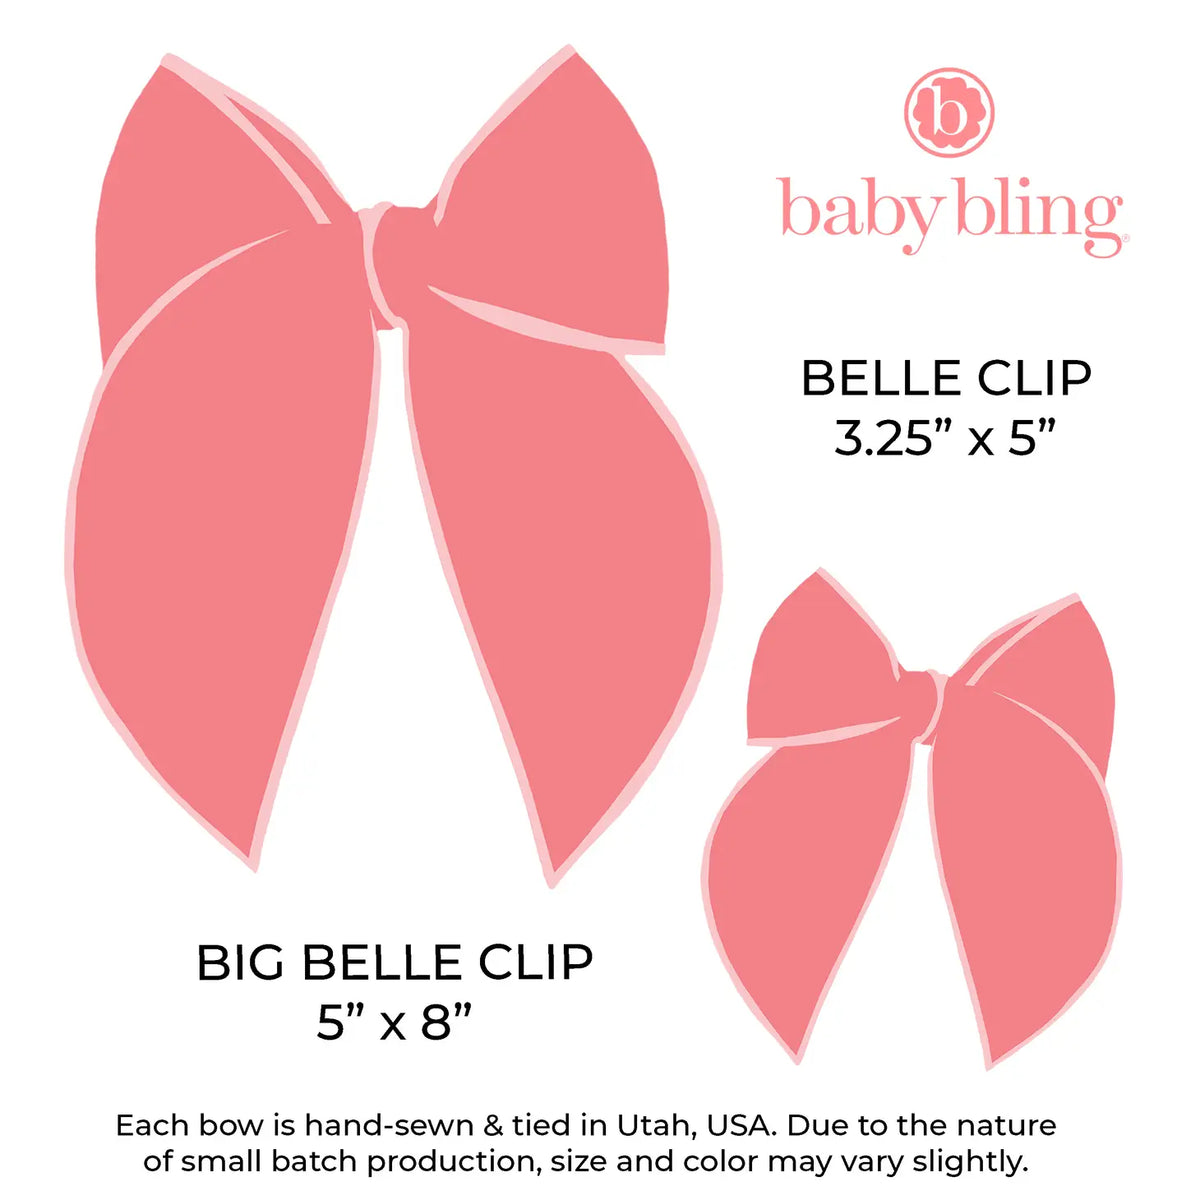 Big Belle Clip: Strawberry / Blush Pink